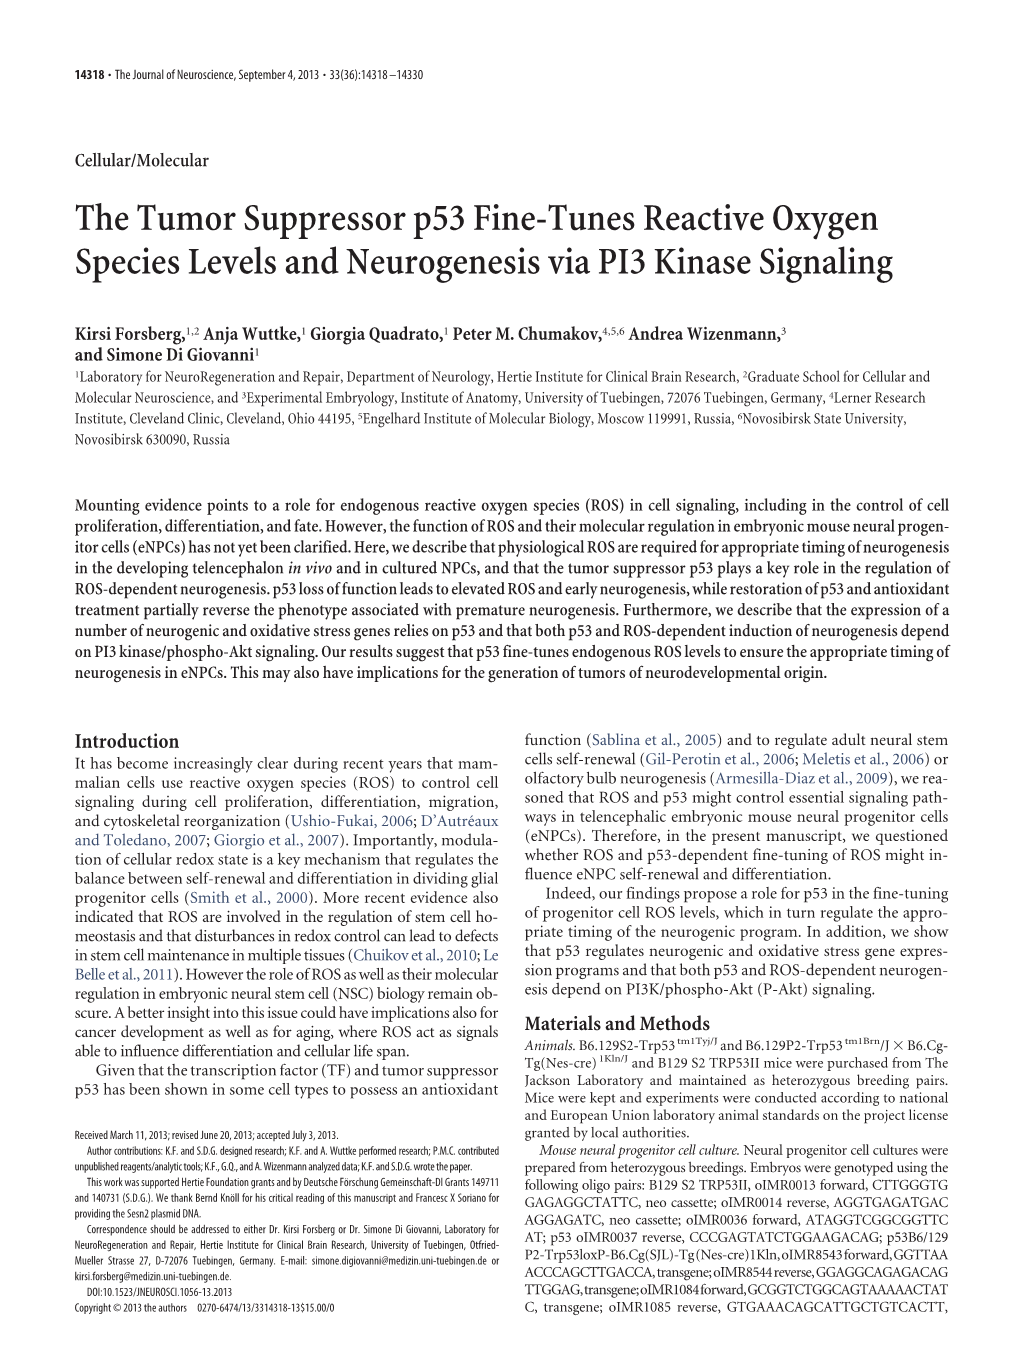 The Tumor Suppressor P53 Fine-Tunes Reactive Oxygen Species Levels and Neurogenesis Via PI3 Kinase Signaling